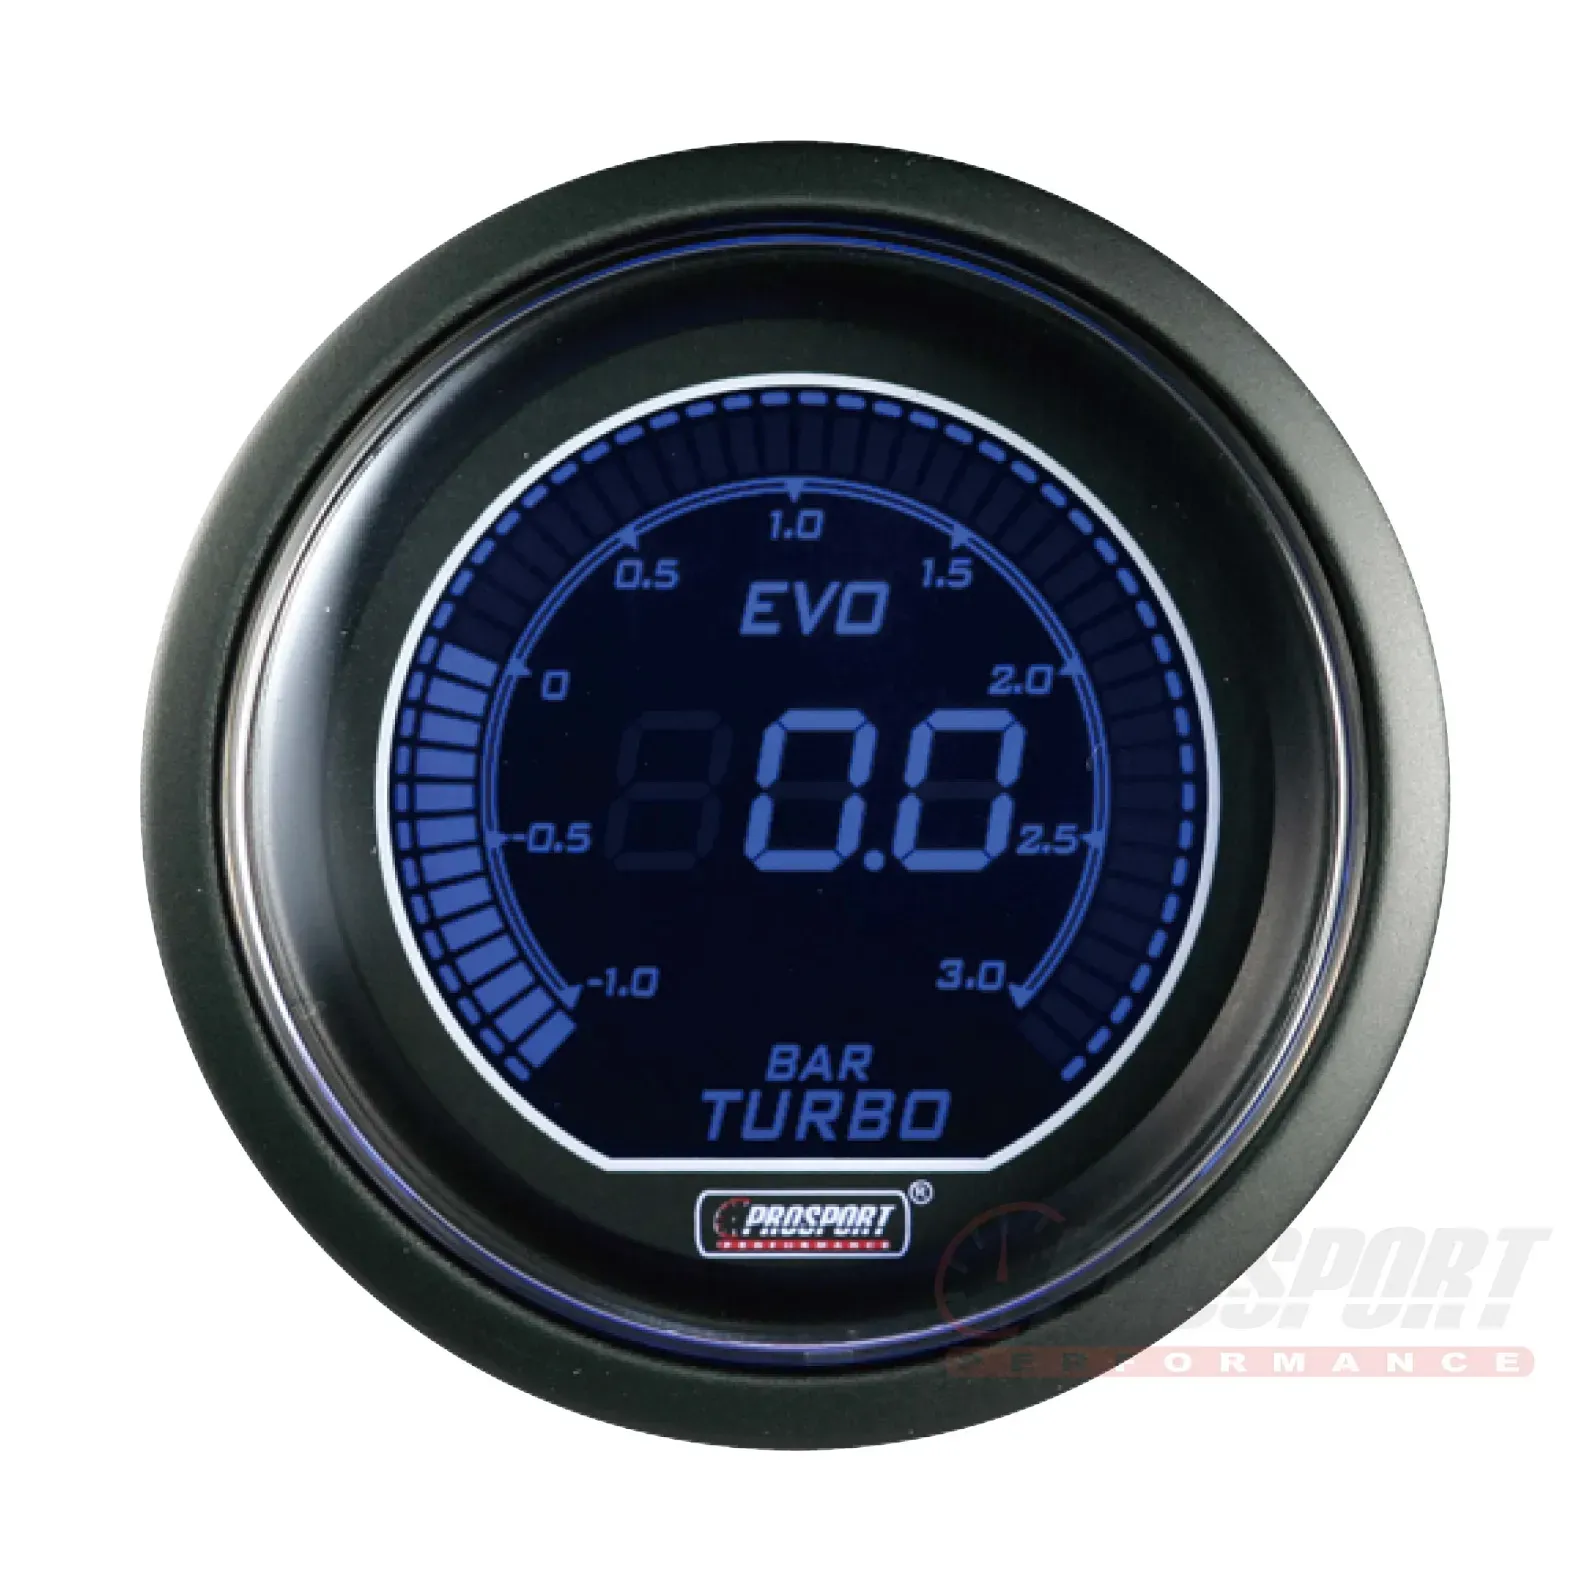 Prosport 52mm EVO Car Oil Pressure Gauge Red and Blue LCD Digital Display 